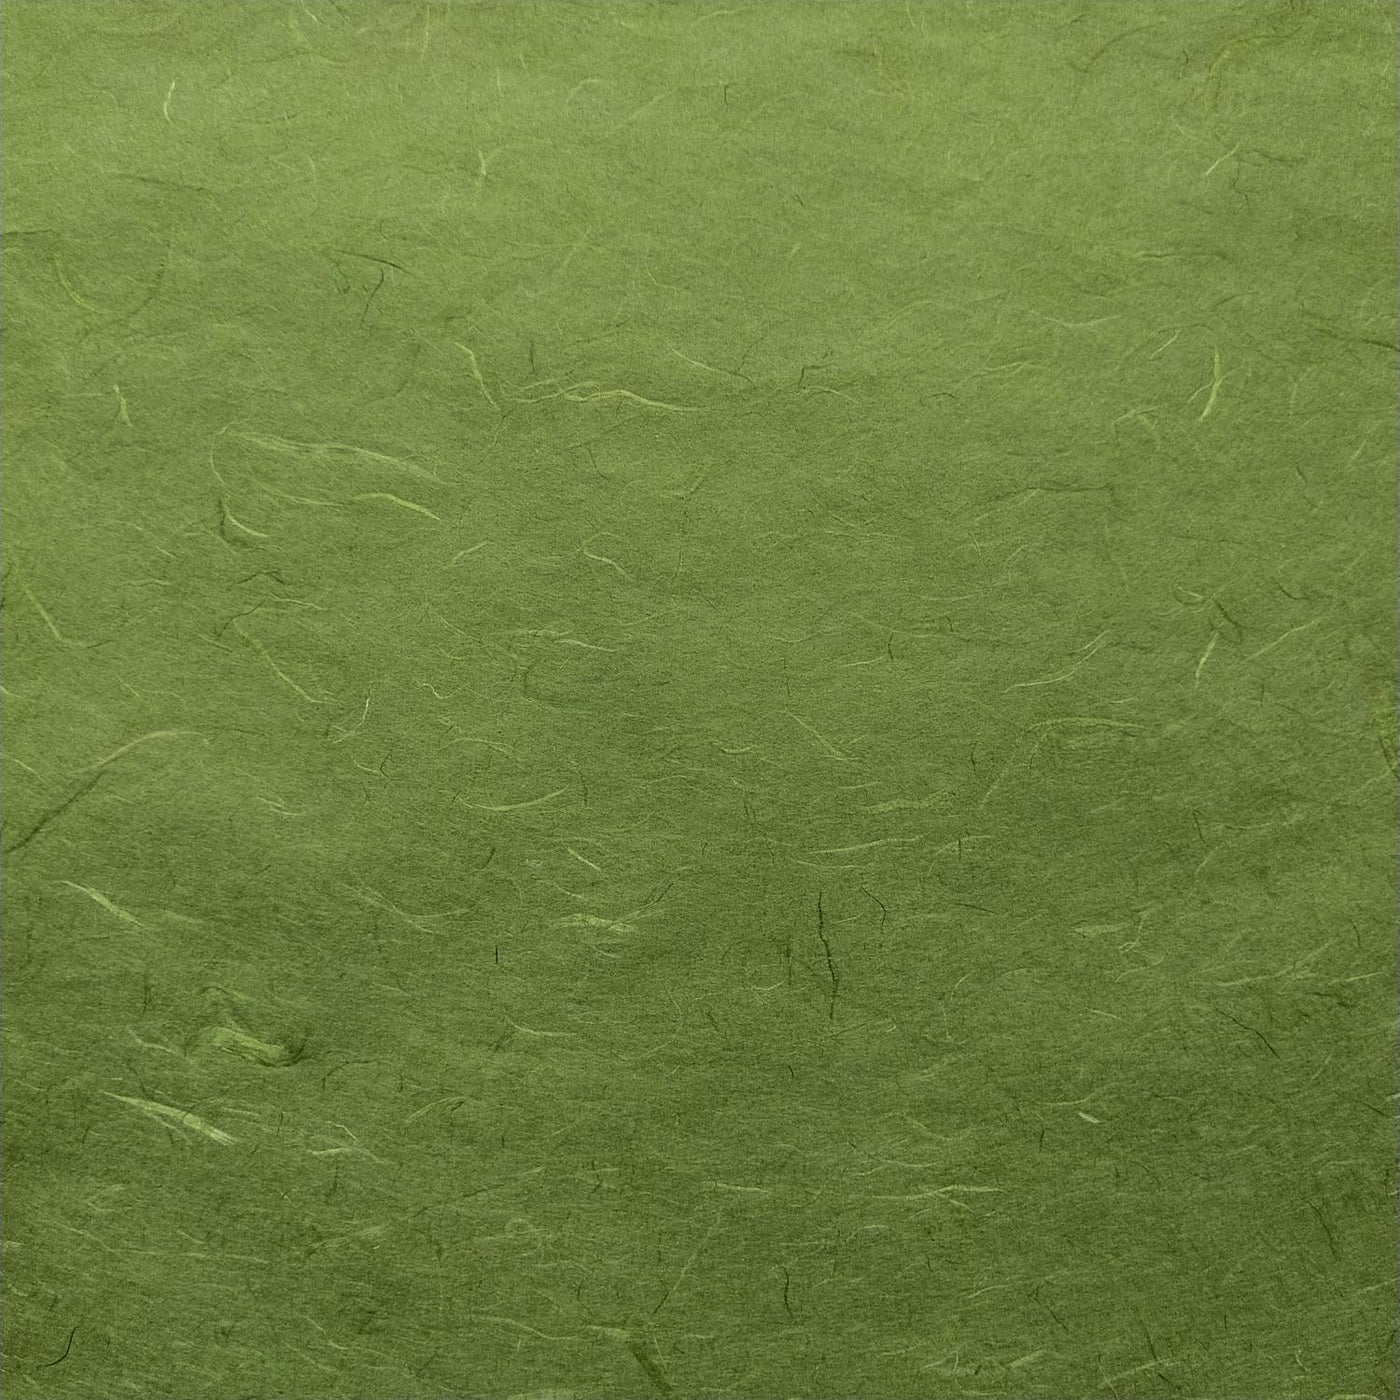 Unryu Kozo Mulberry Paper (Fern Green)